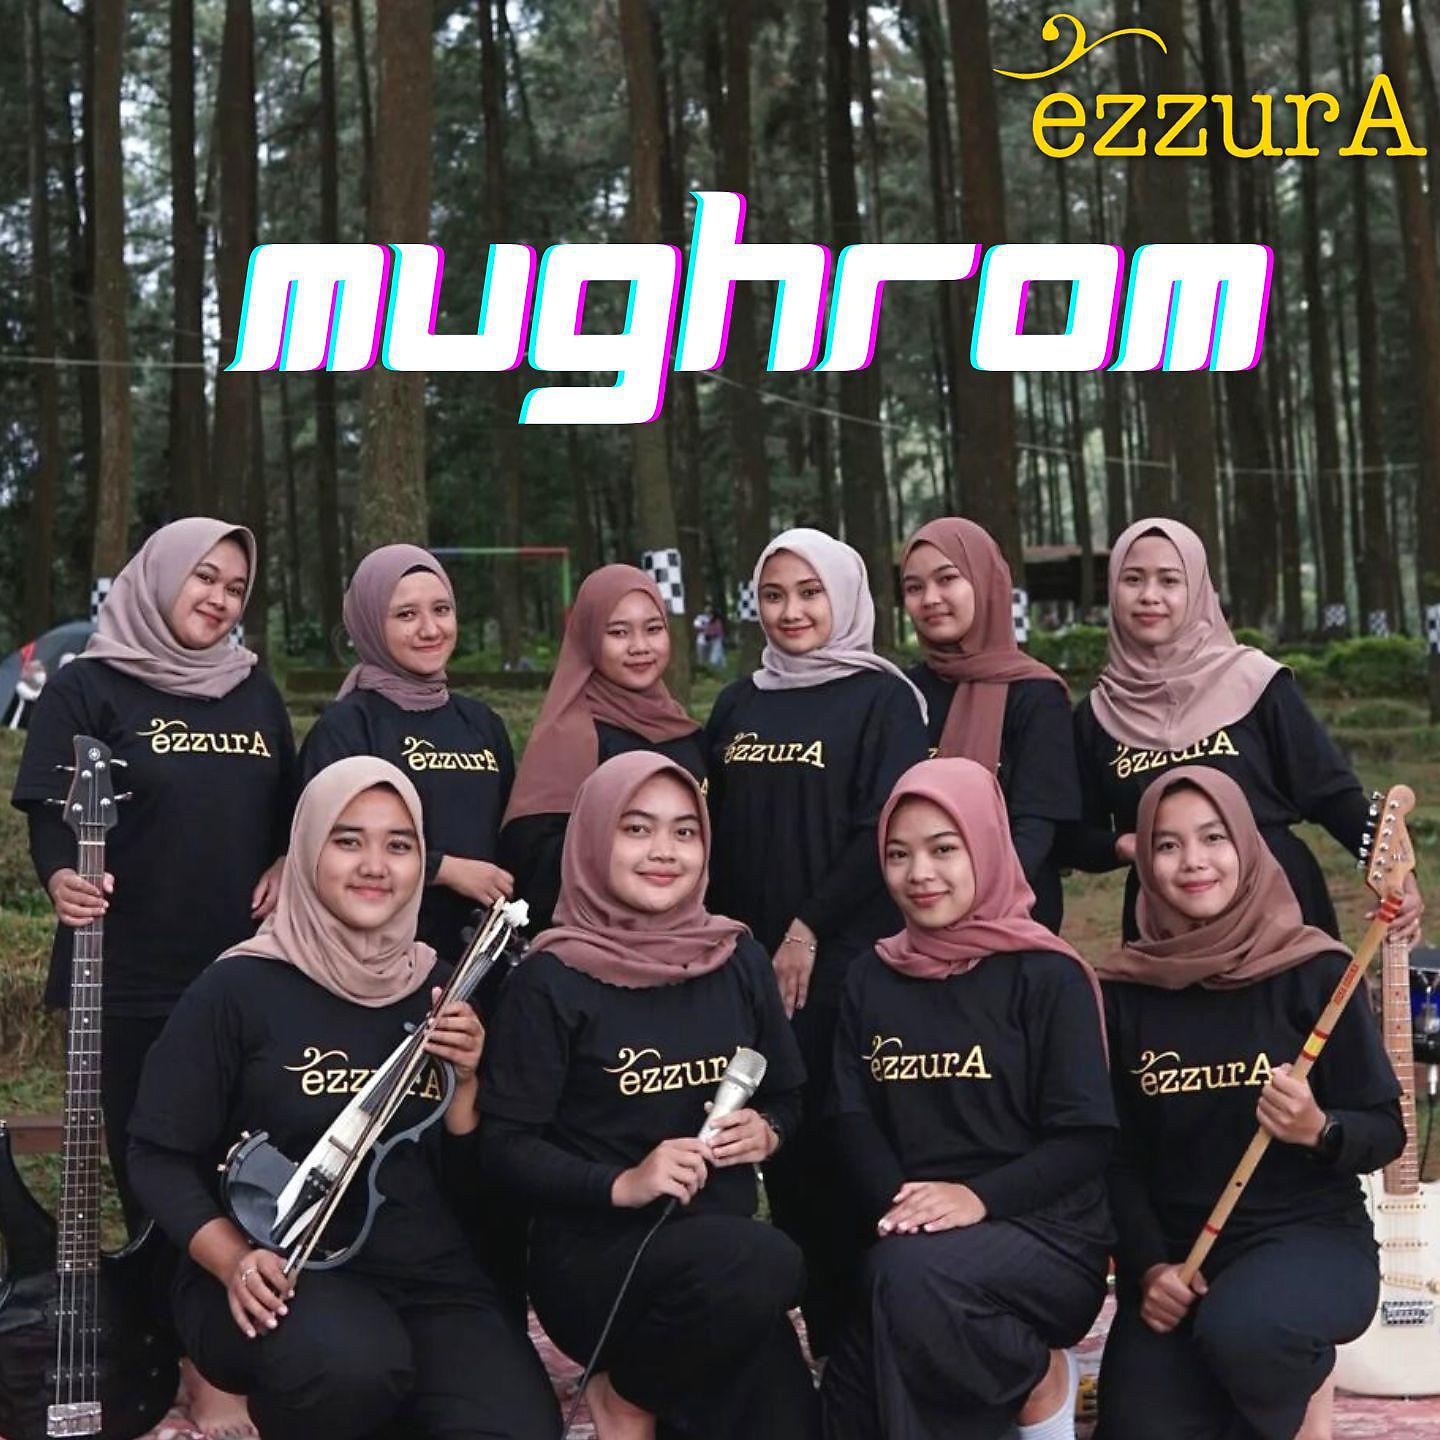 Постер альбома Mughrom